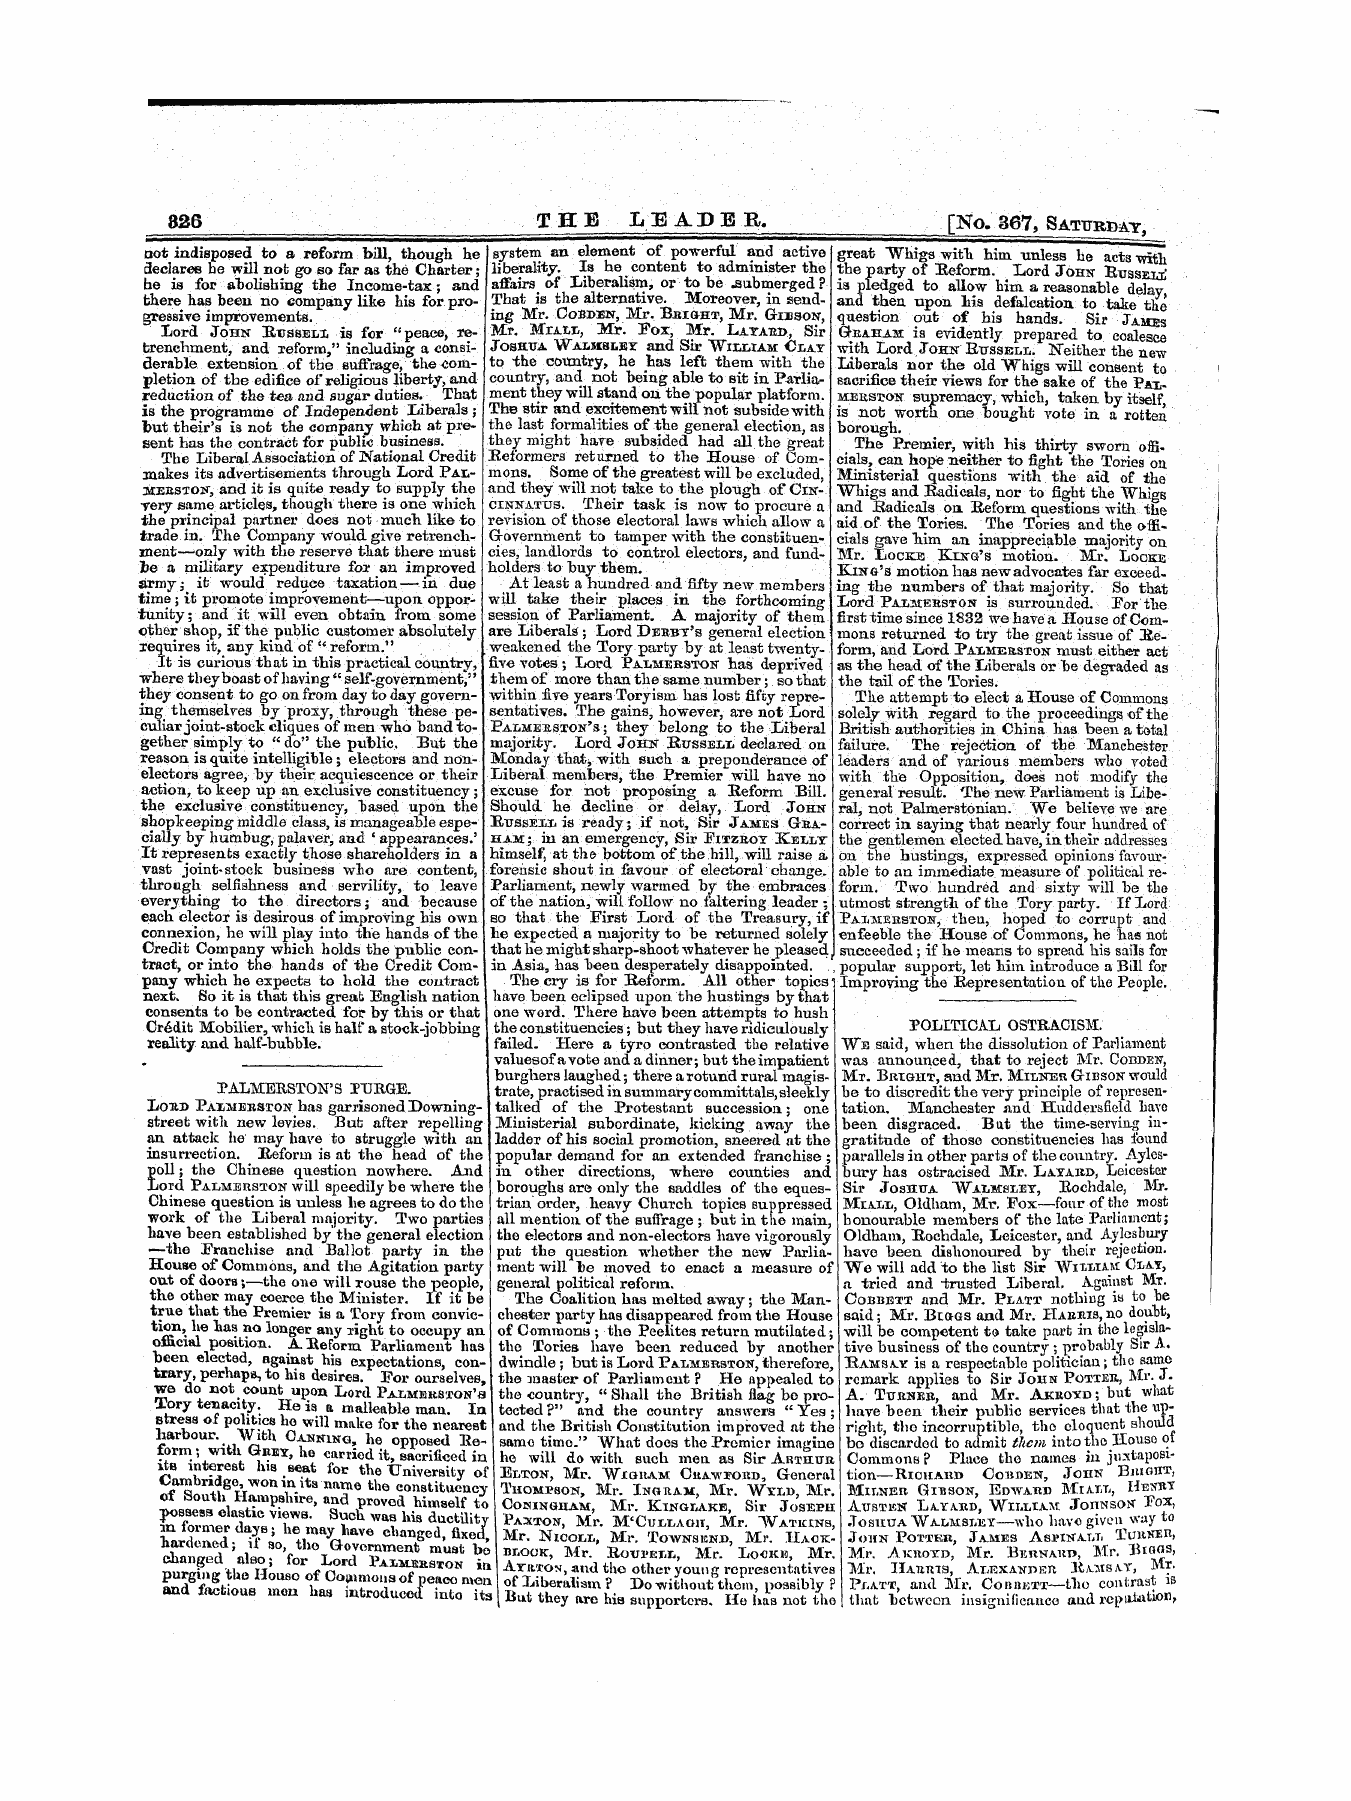 Leader (1850-1860): jS F Y, 1st edition - Talmerston's Ttjrge